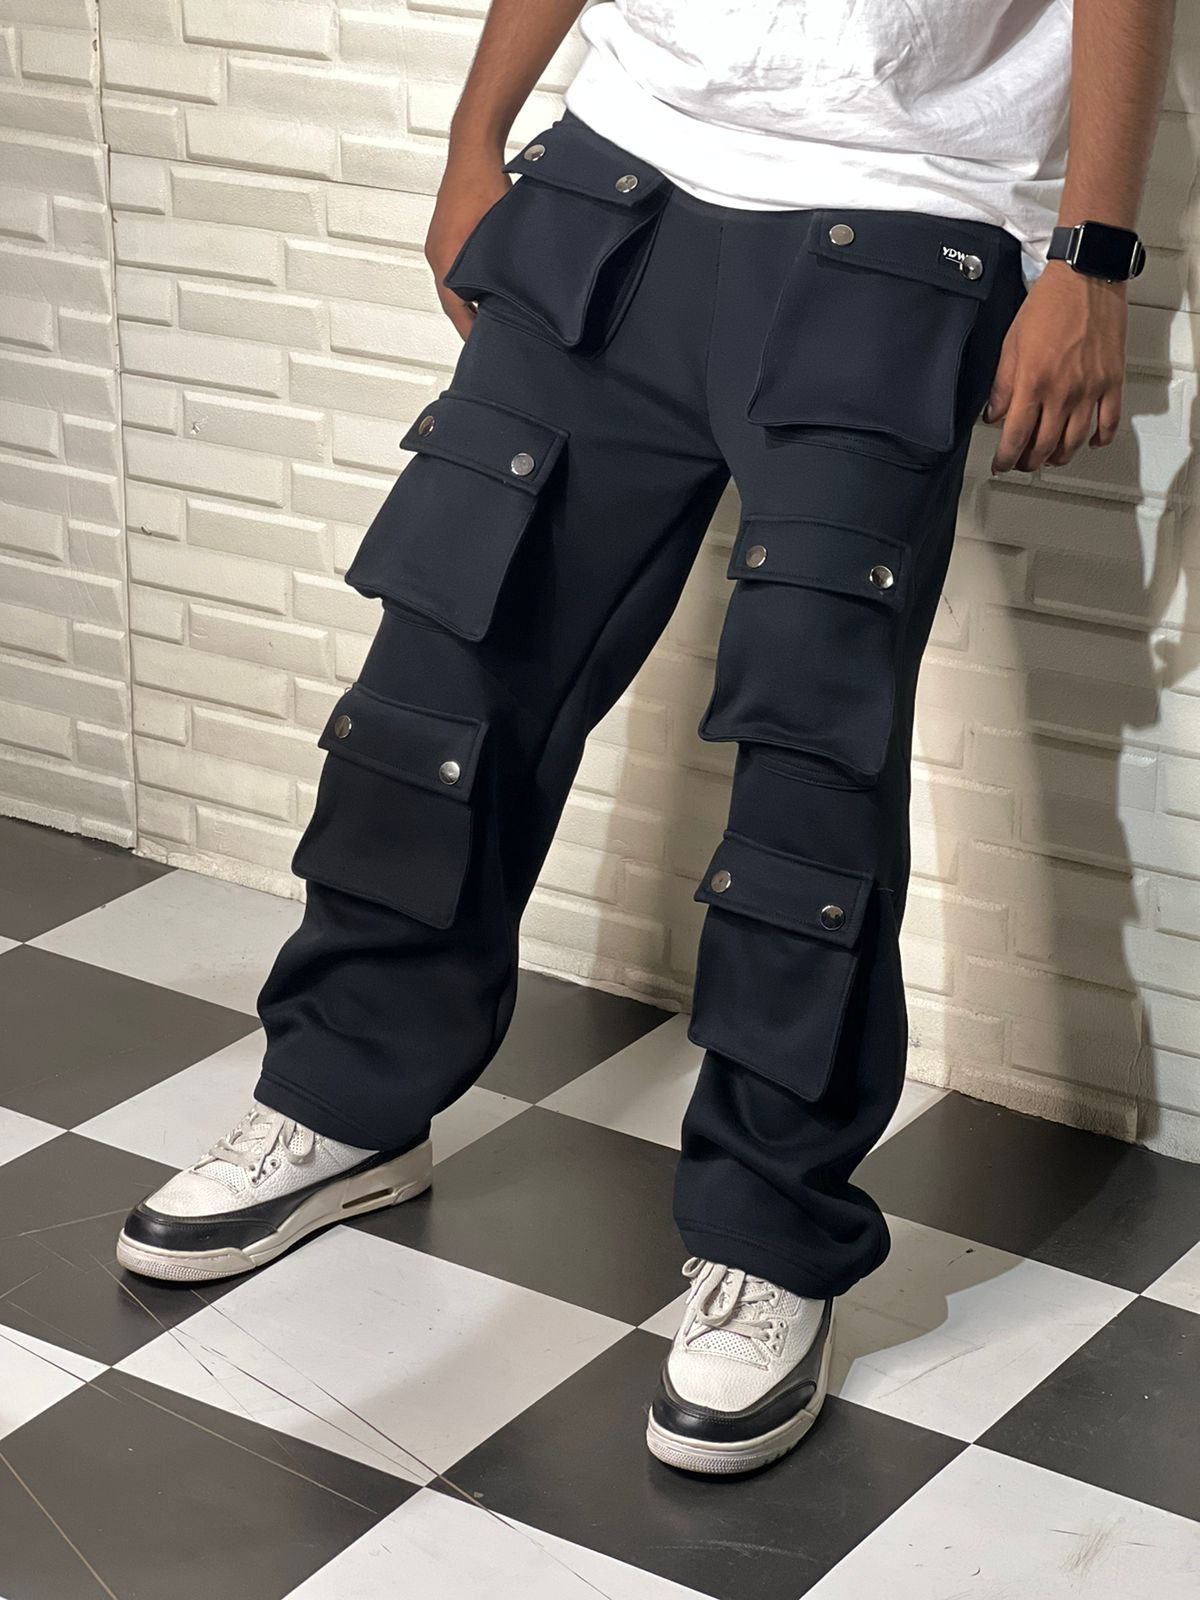 Buy Krystle Men's Cotton Slim fit Cargo Trouser Pant 6 Pocket (Green, 28)  at Amazon.in